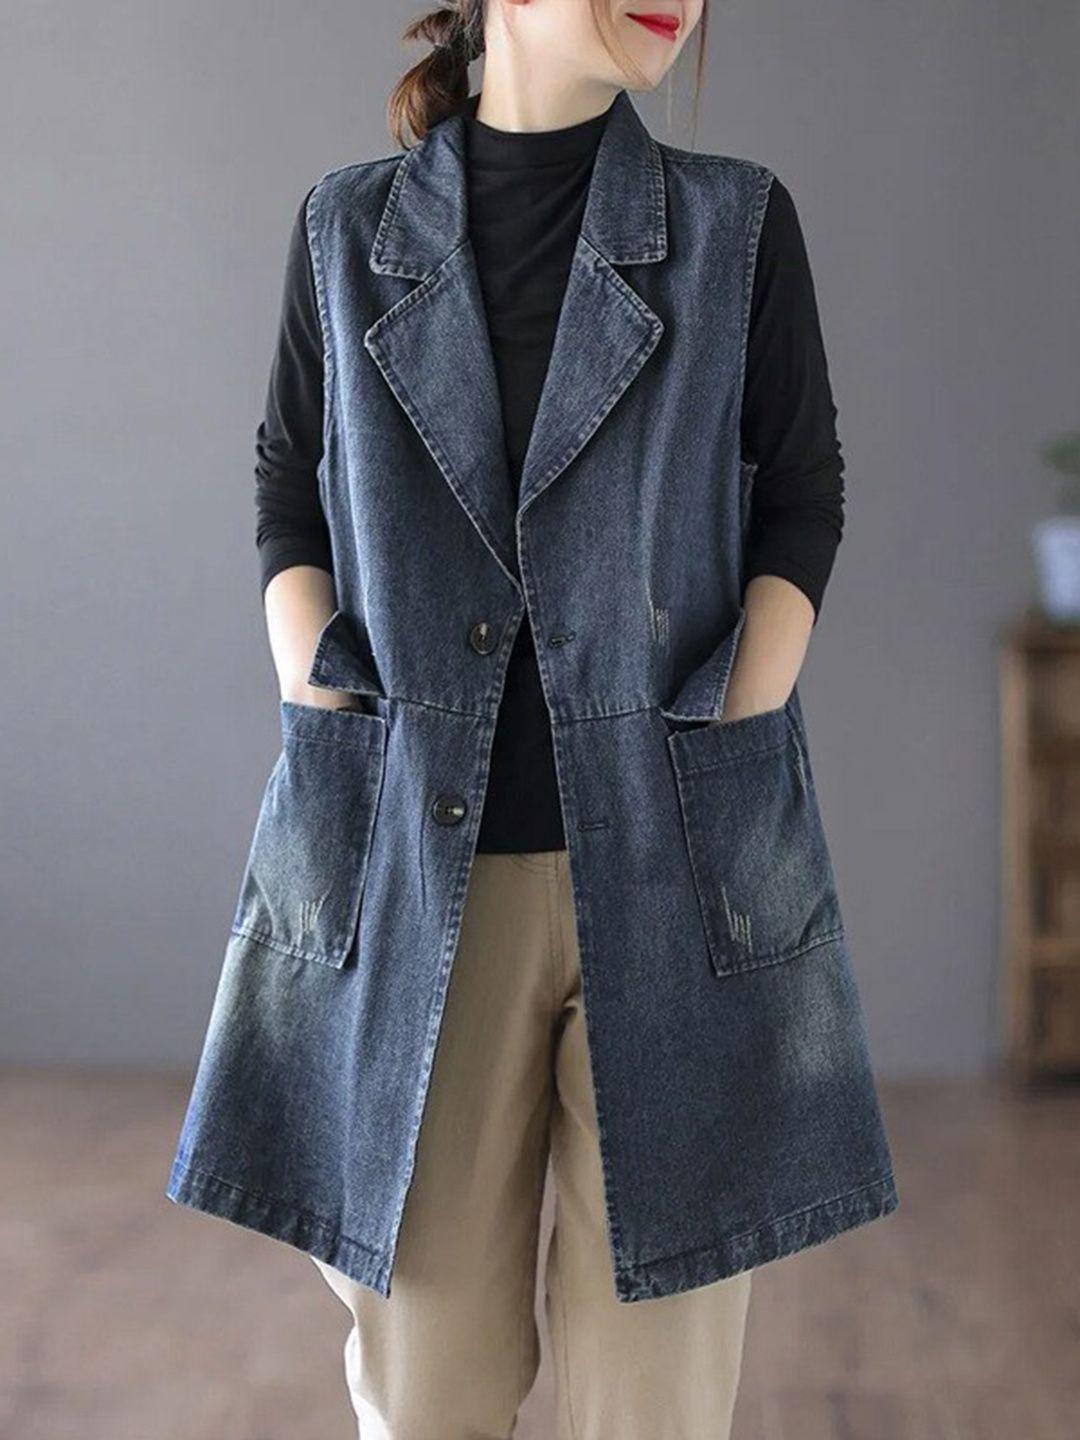 stylecast pure cotton overcoat